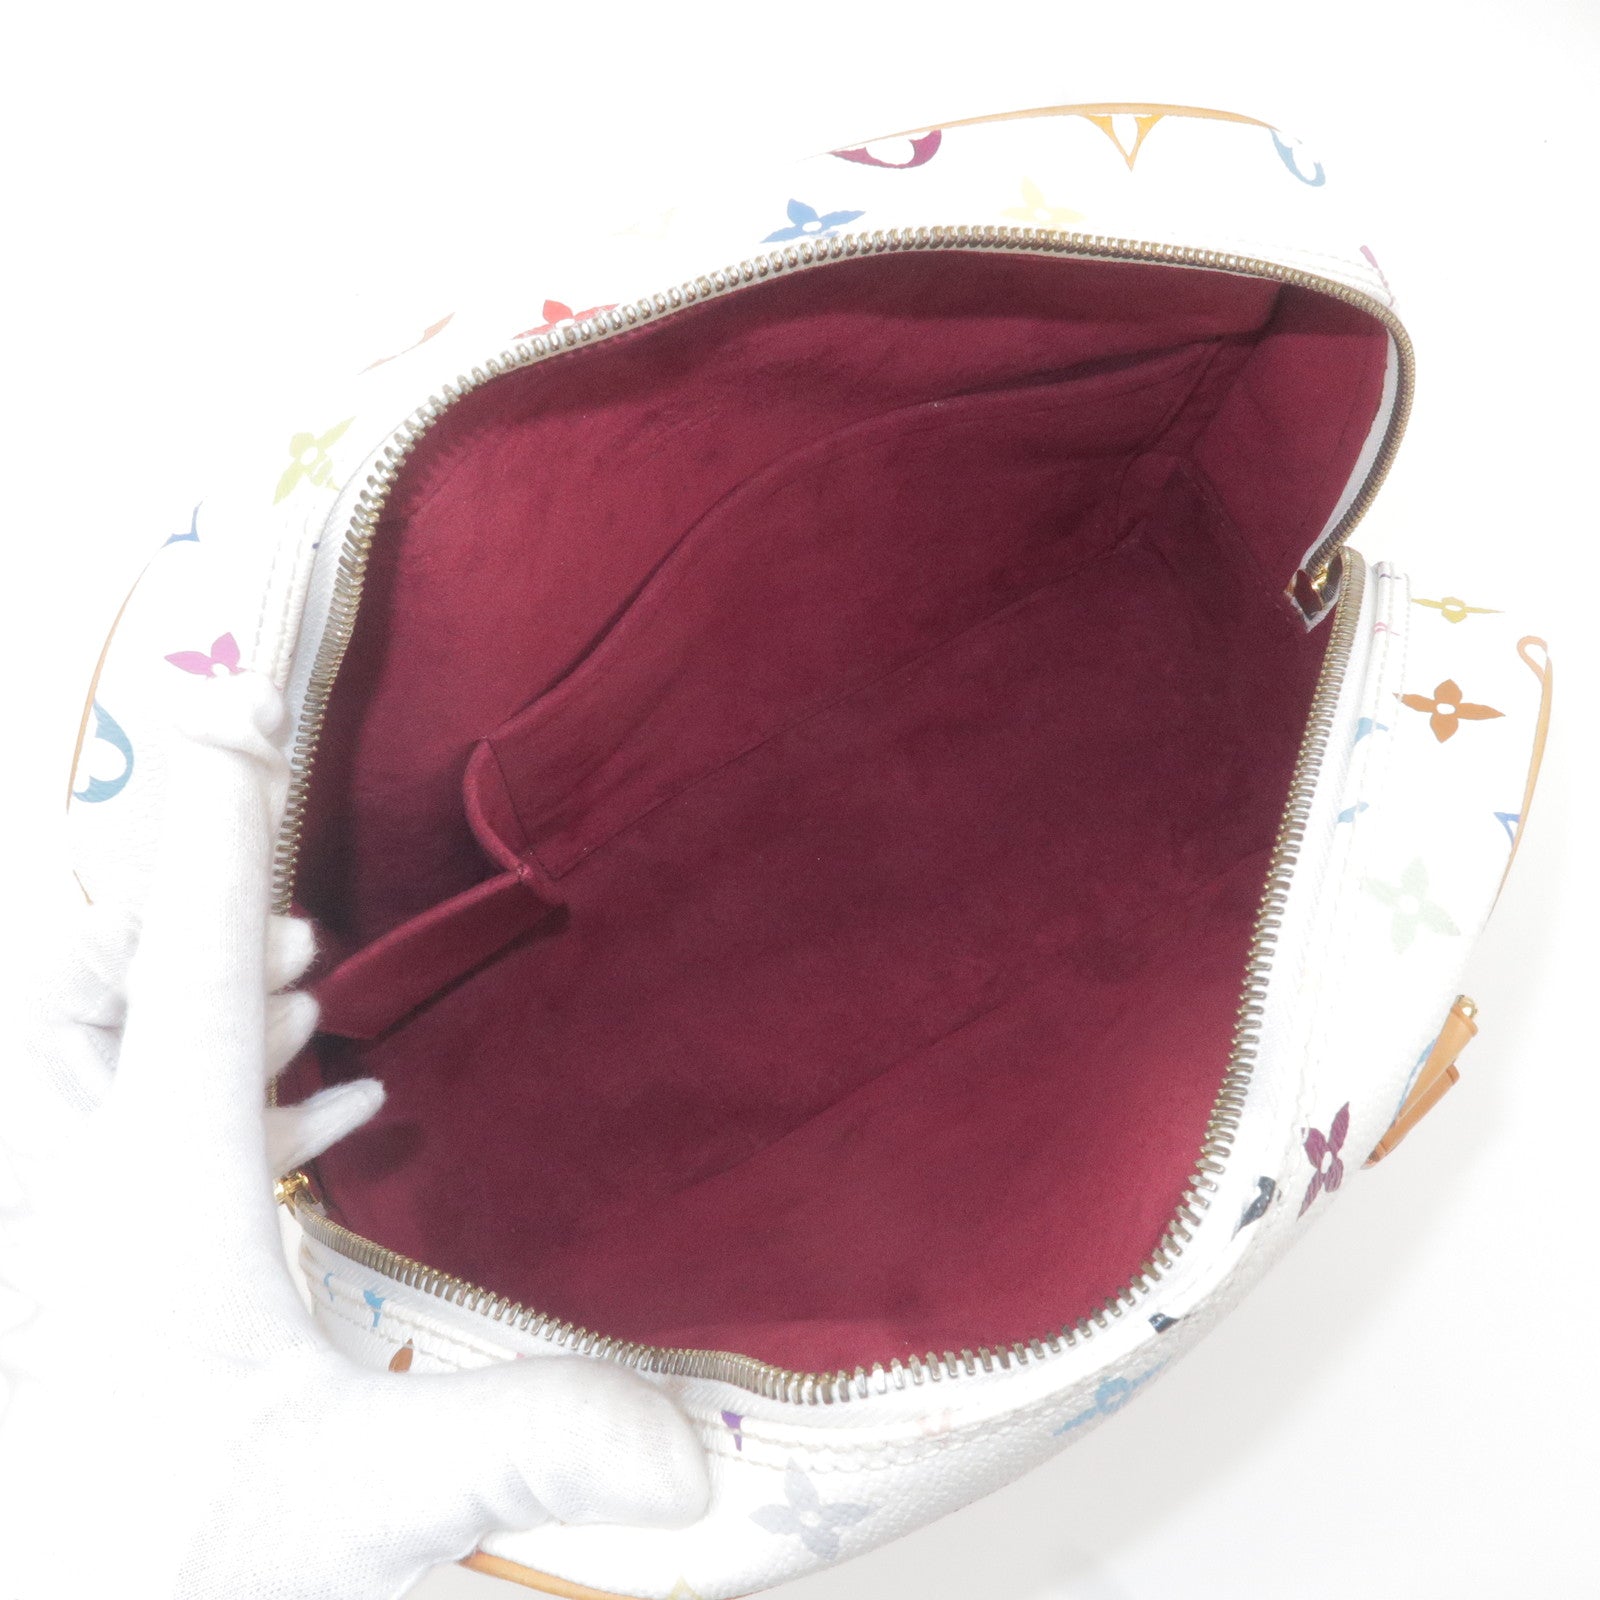 Naviglio leather satchel Louis Vuitton Multicolour in Leather